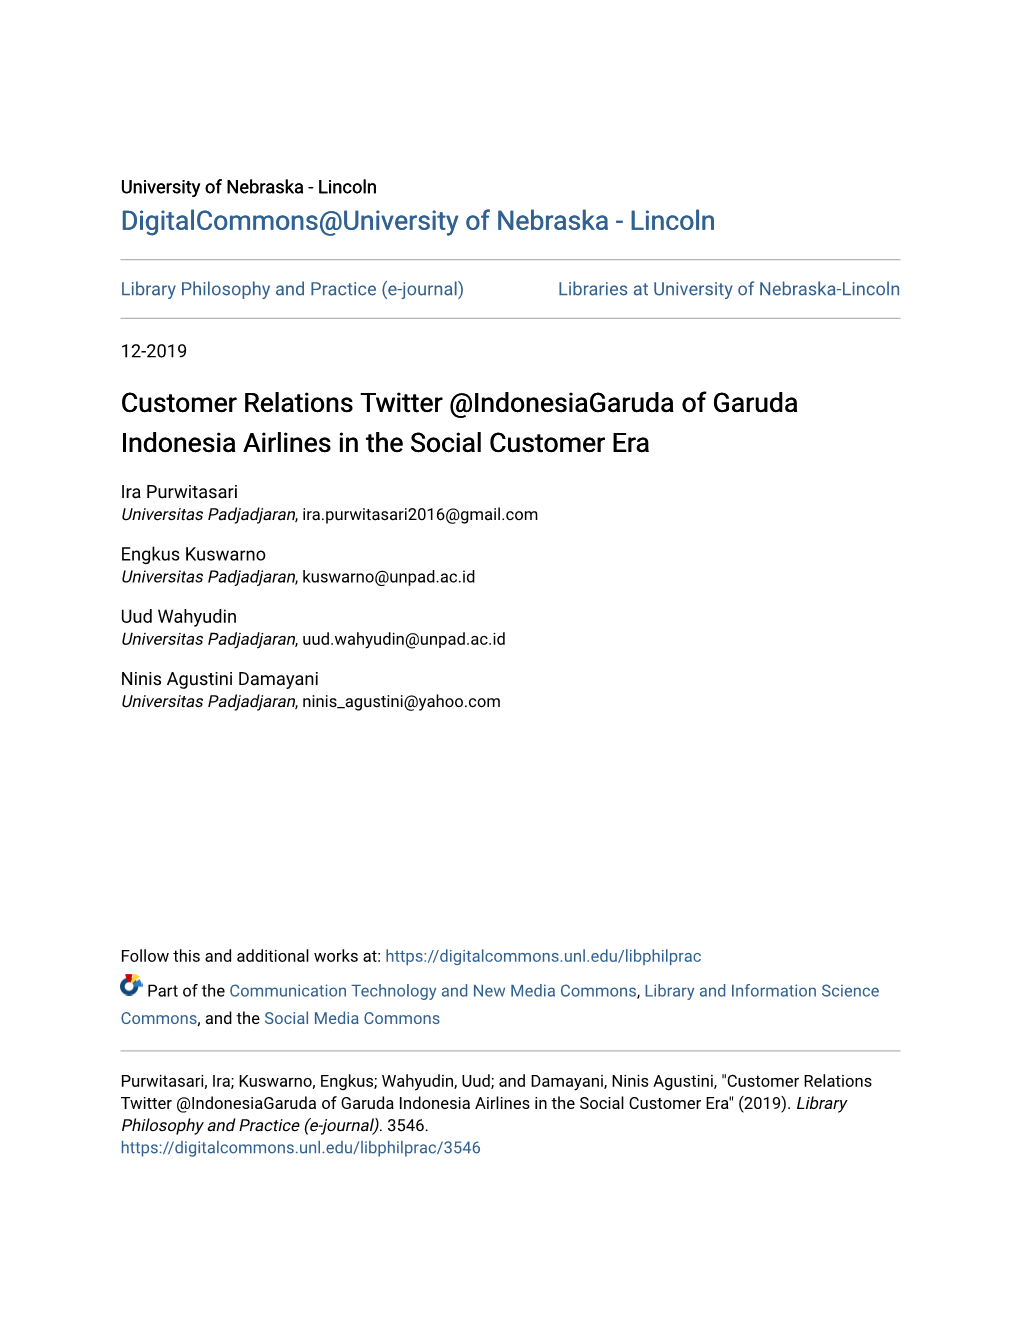 Customer Relations Twitter @Indonesiagaruda of Garuda Indonesia Airlines in the Social Customer Era